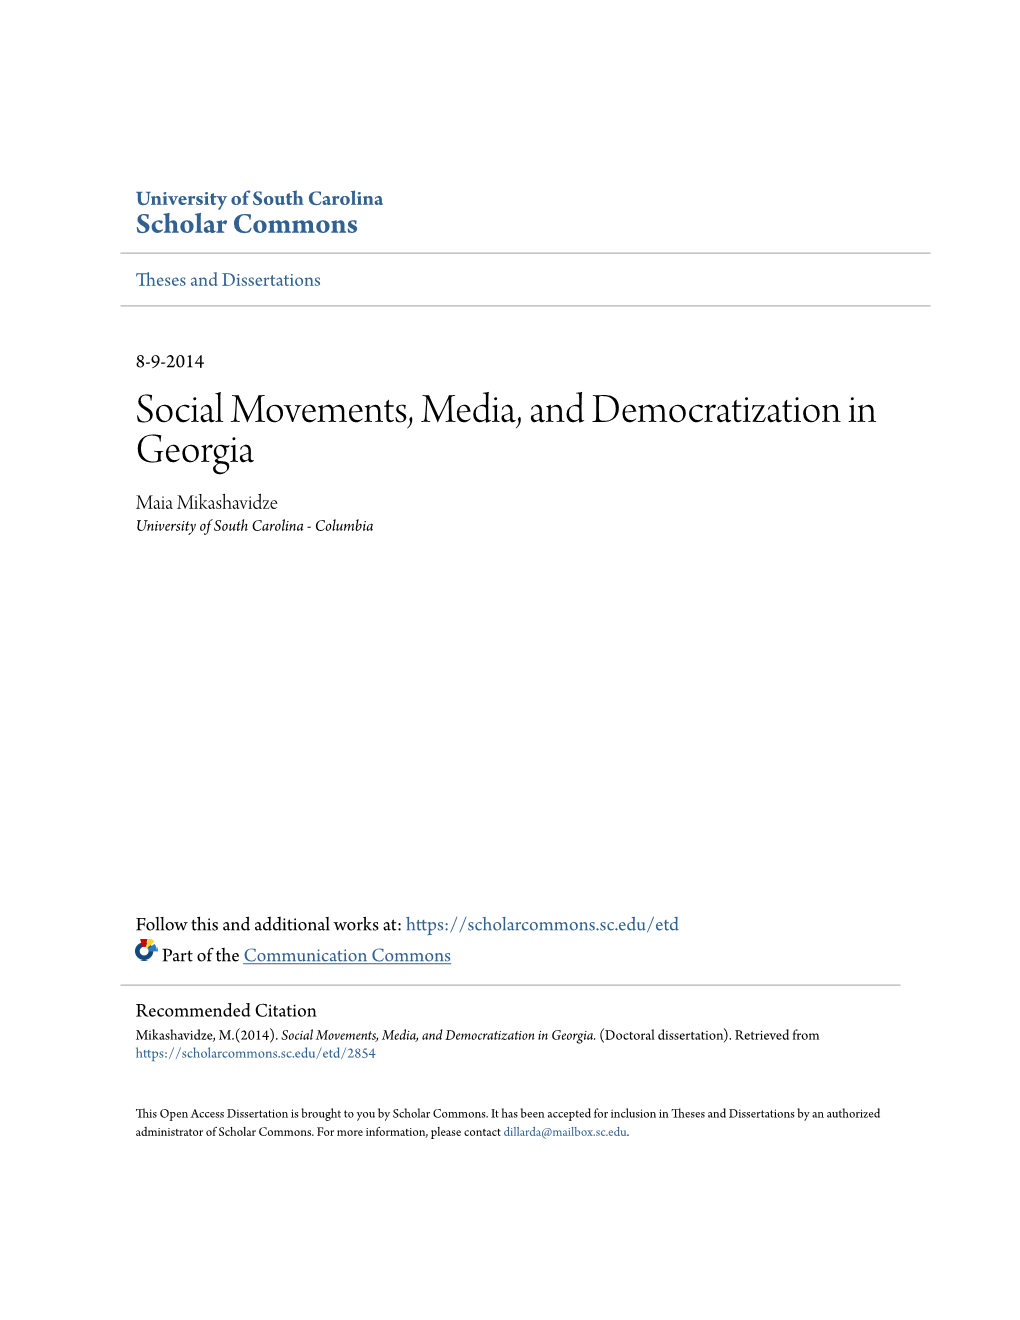 Social Movements, Media, and Democratization in Georgia Maia Mikashavidze University of South Carolina - Columbia